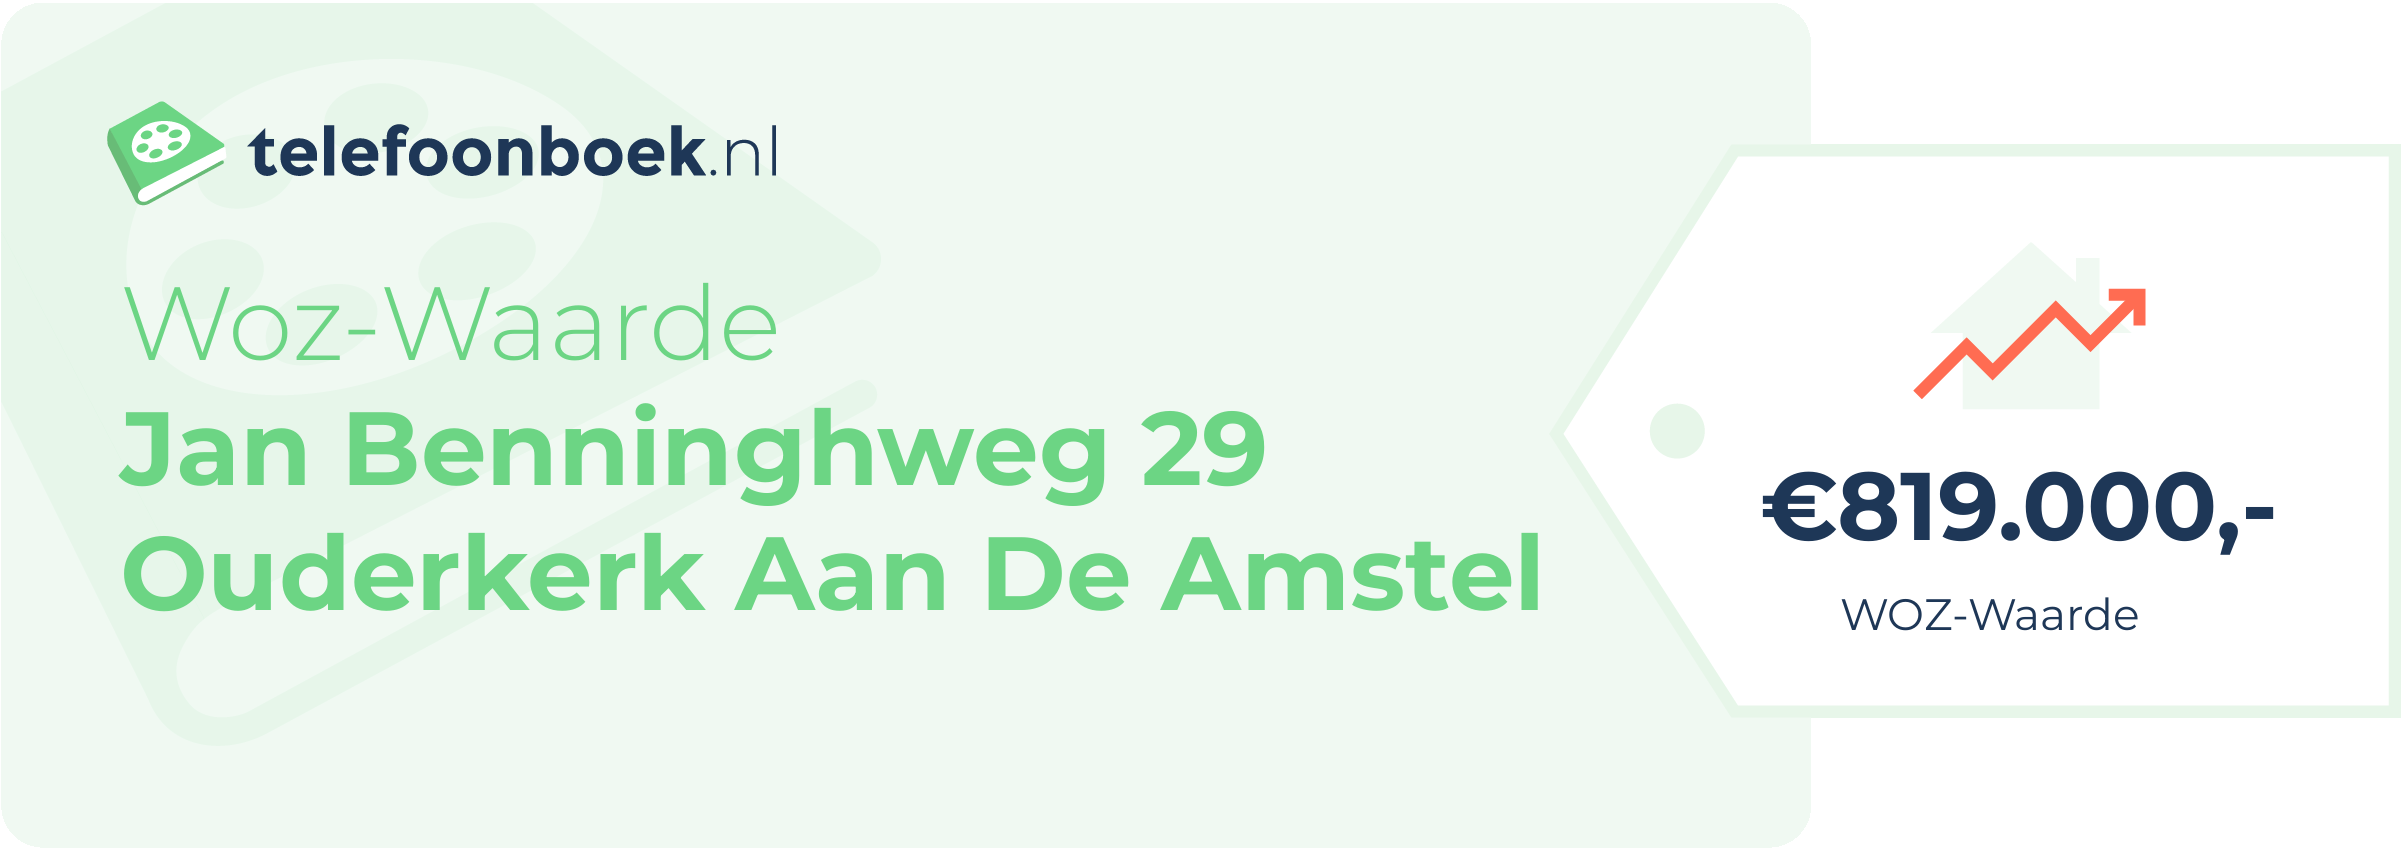 WOZ-waarde Jan Benninghweg 29 Ouderkerk Aan De Amstel